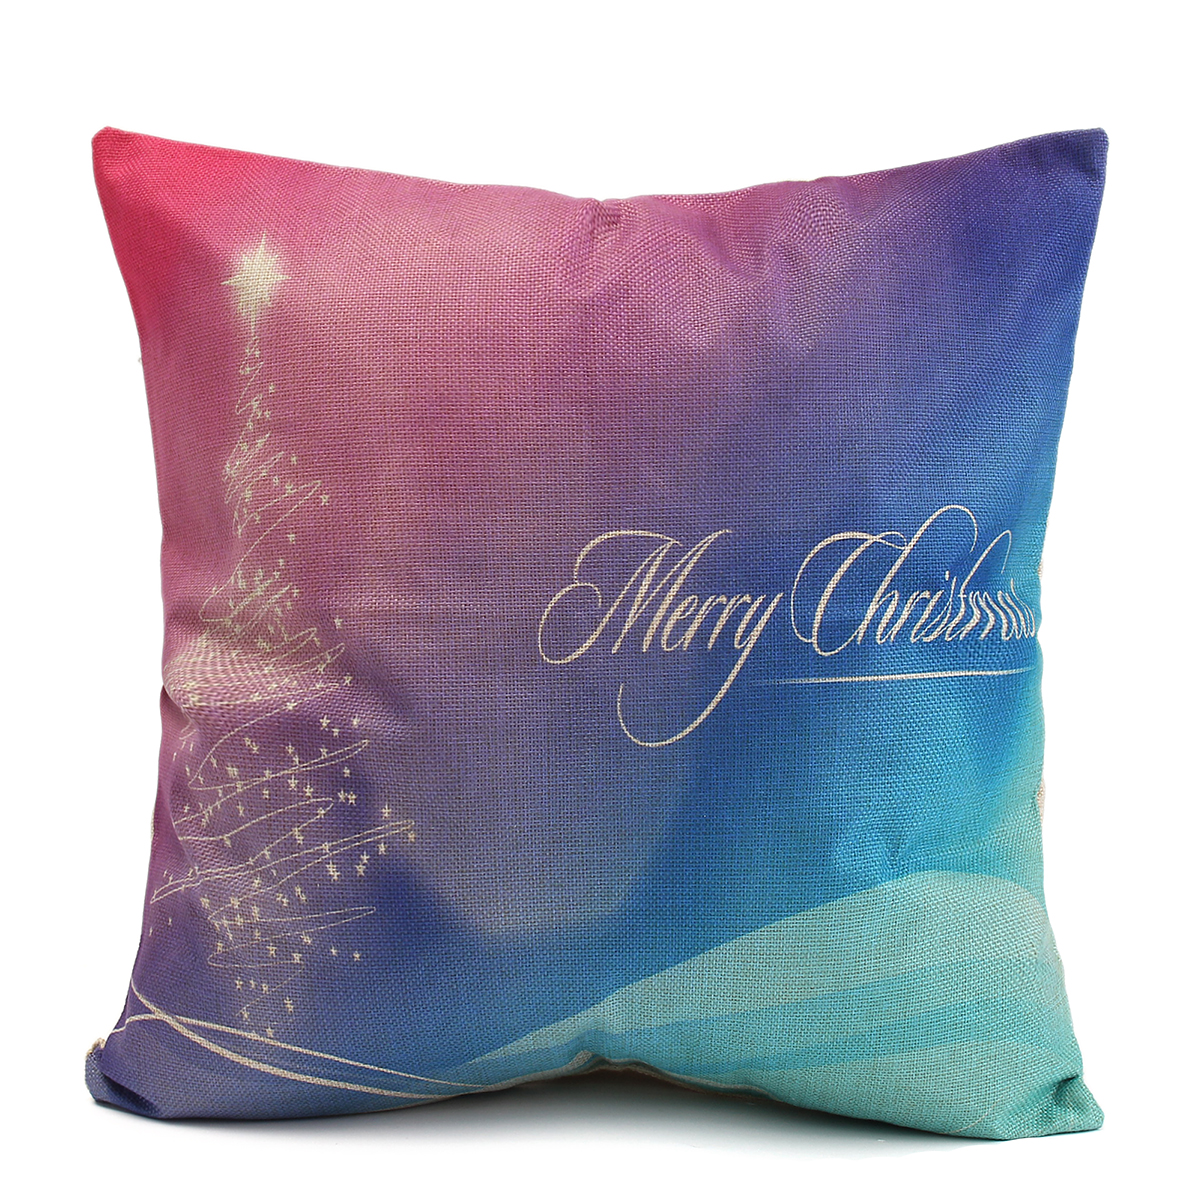 45X45cm-Christmas-Fashion-Cotton-Linen-Pillow-Case-Santa-Claus-Snowmen-Gift-Home-Decor-1097932-6